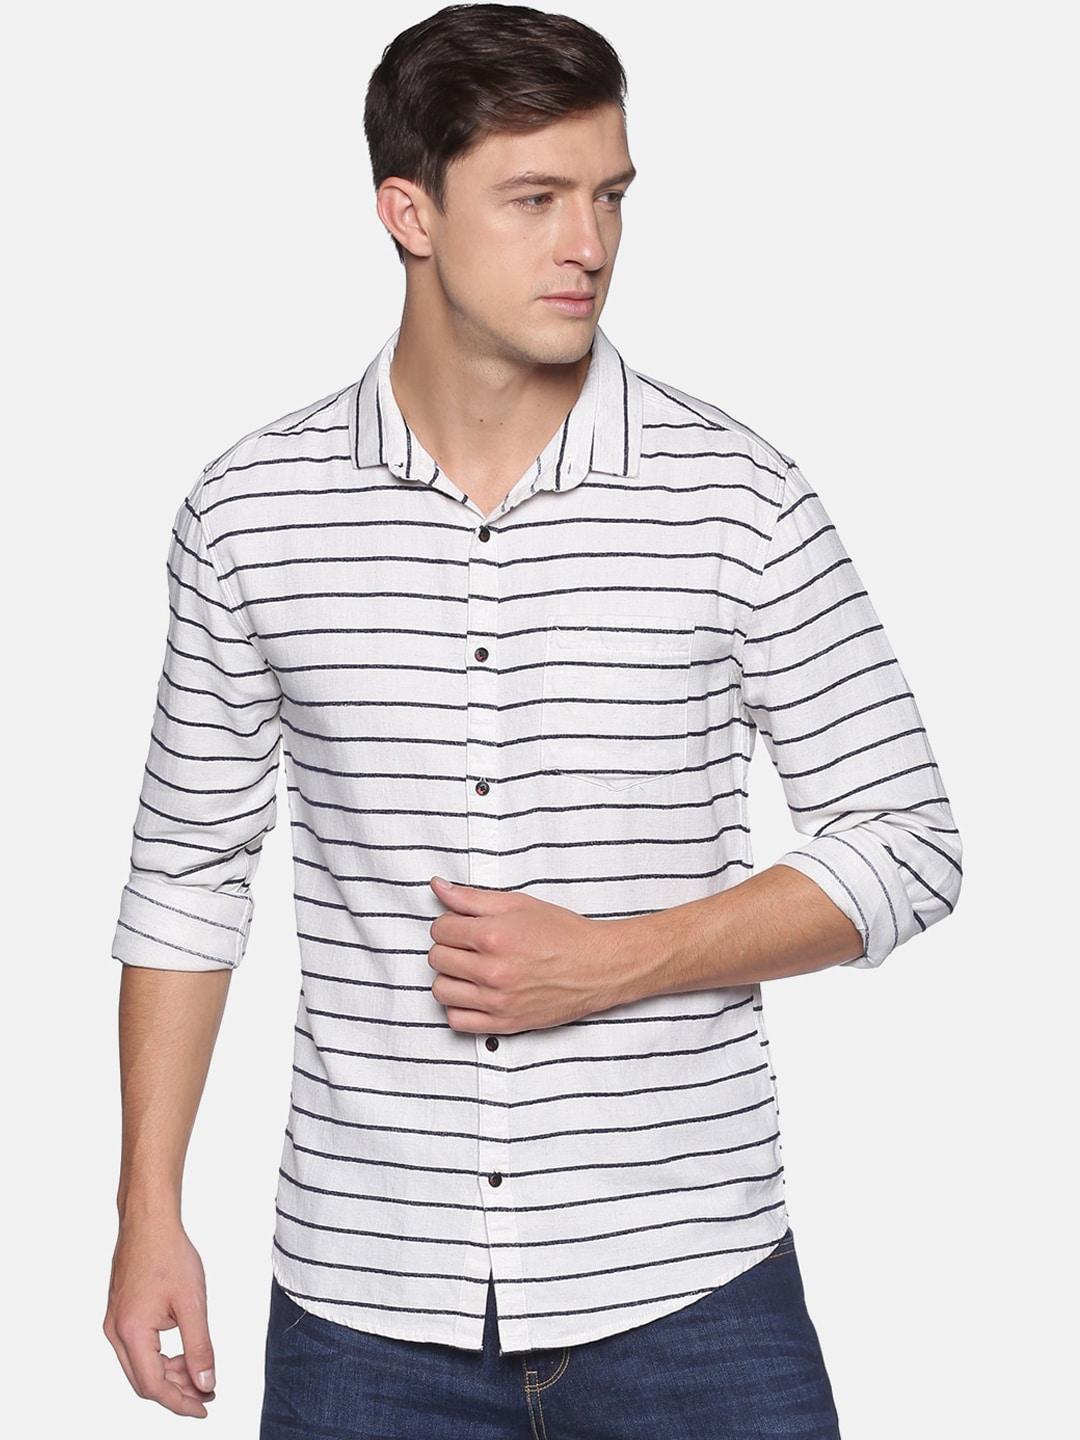 showoff-men-off-white-&-blue-striped-comfort-slim-fit-casual-shirt